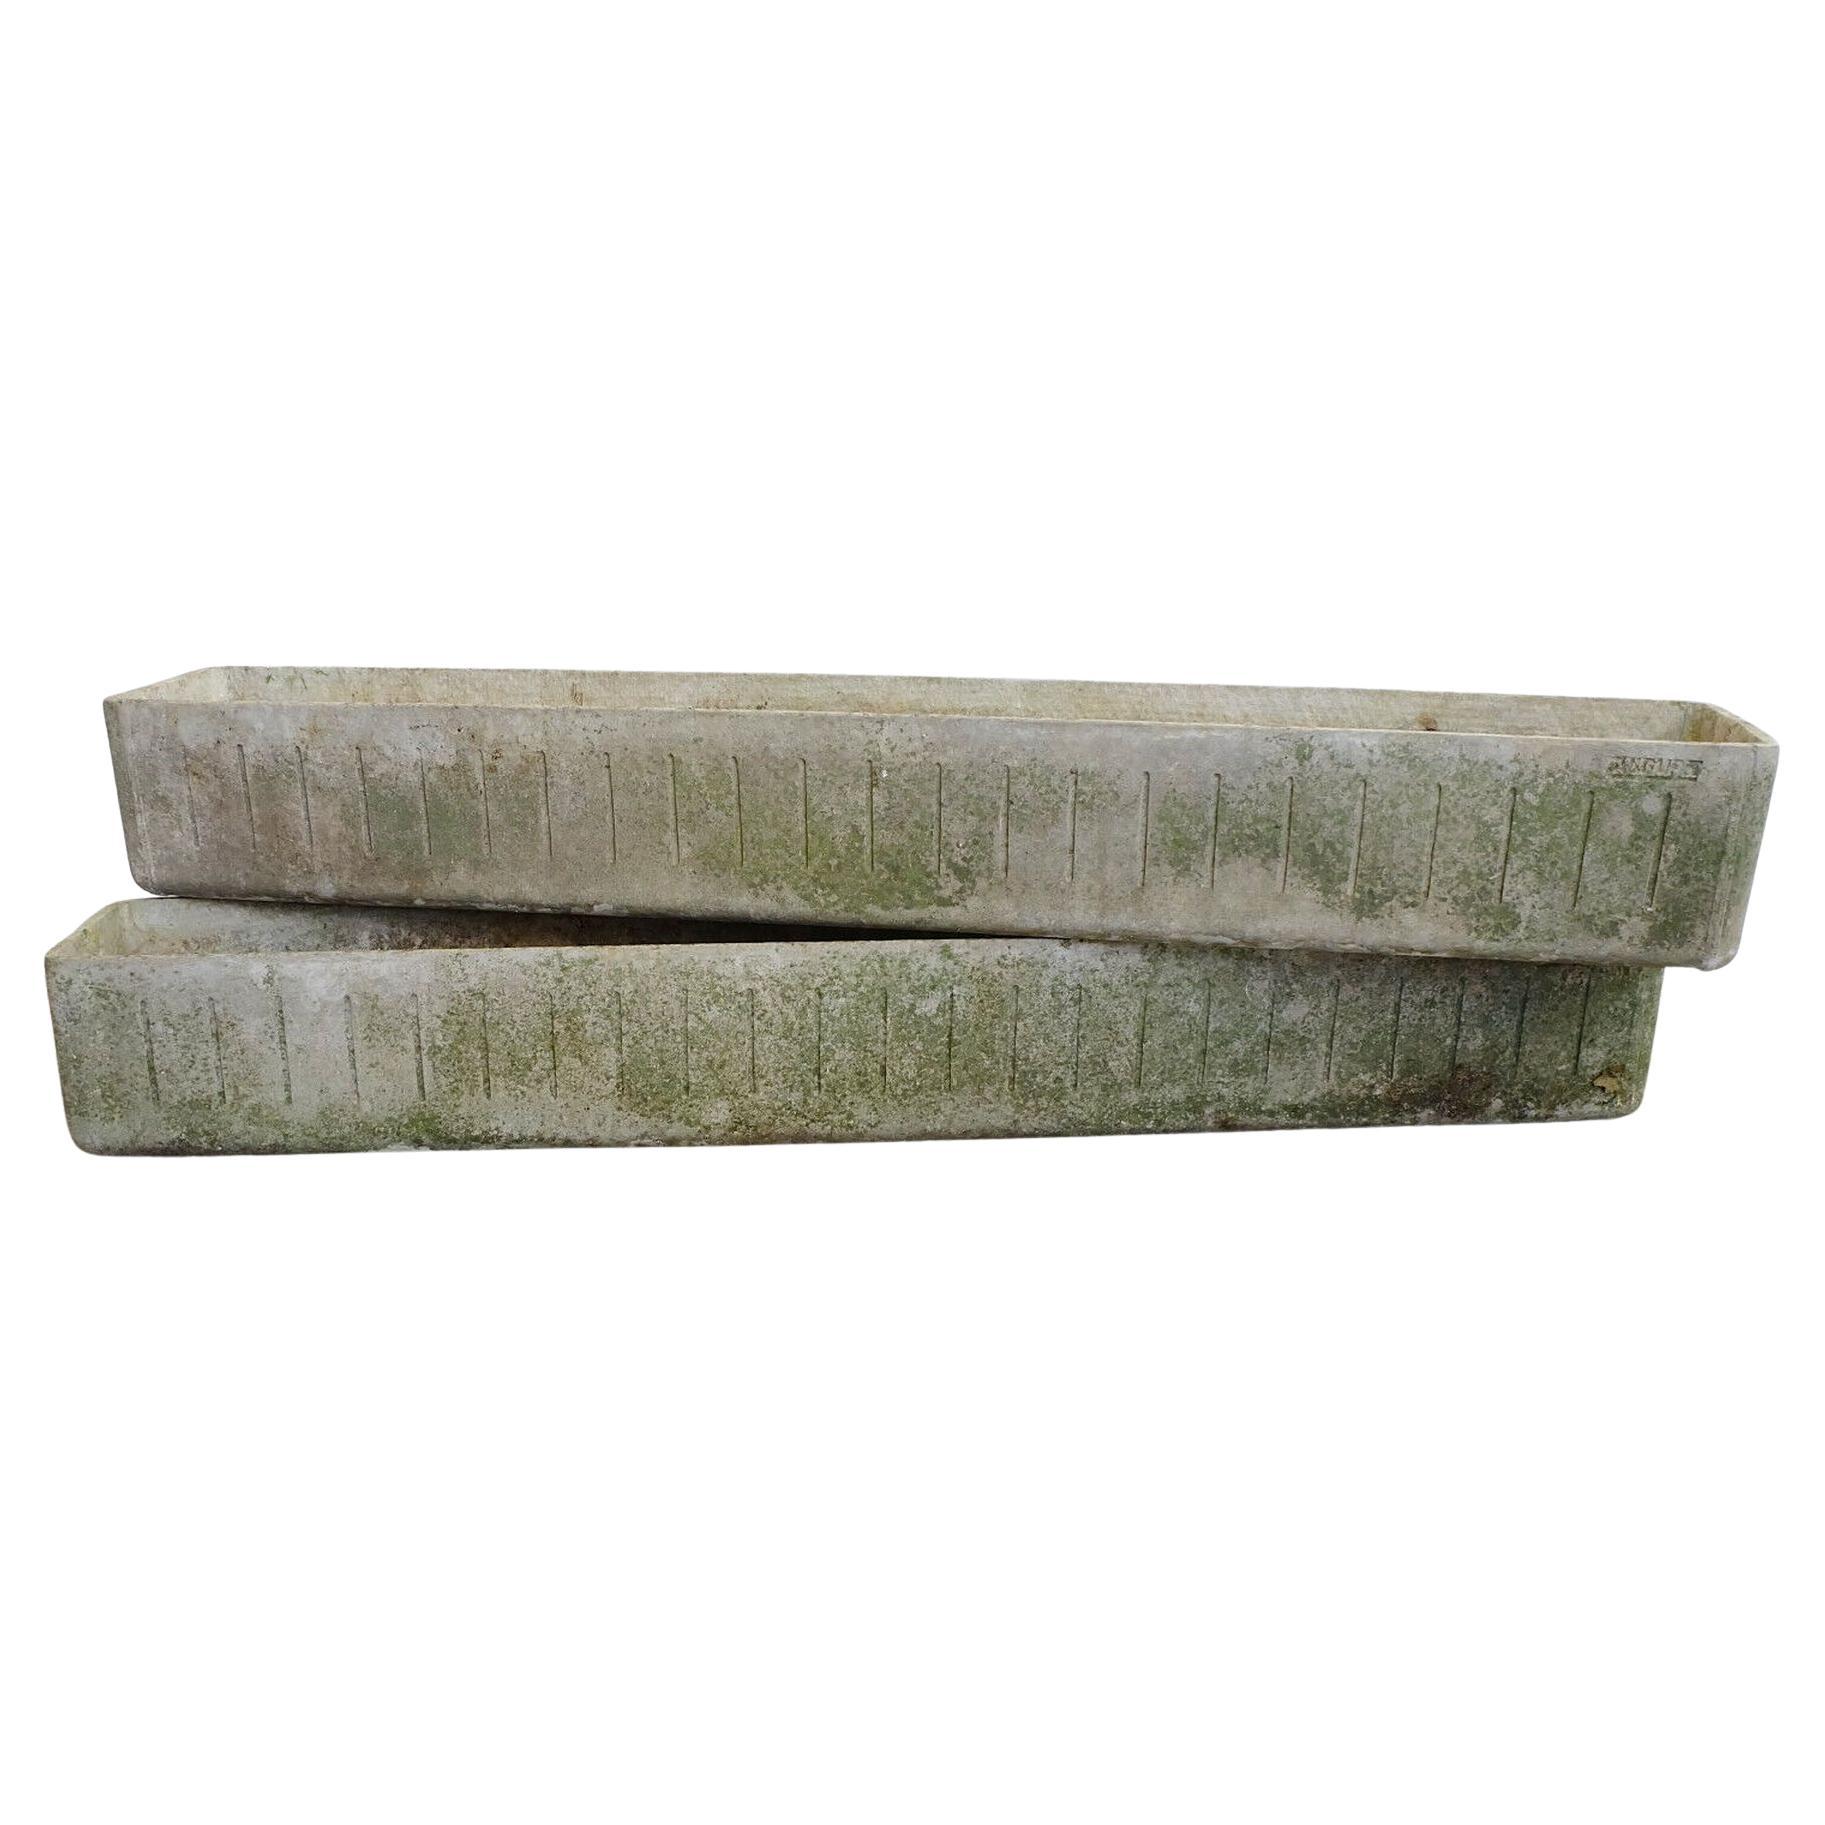 2 rectangular 100cm mid century fiber cement PLANTERS willy guhl era - set 2